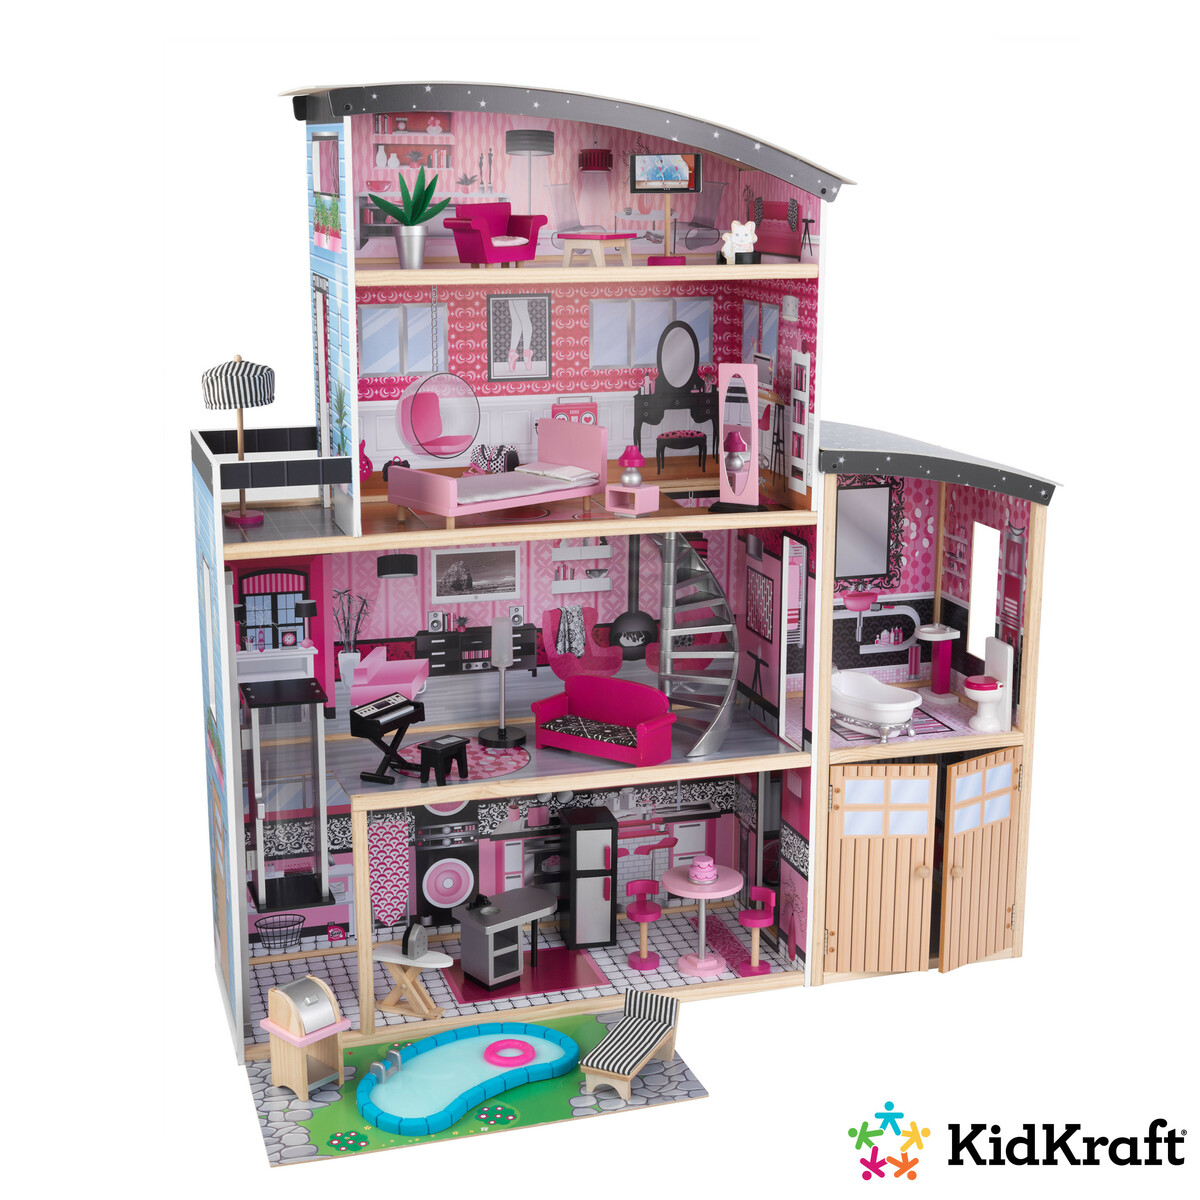 Kid Kraft Mansion Dollhouse 65826